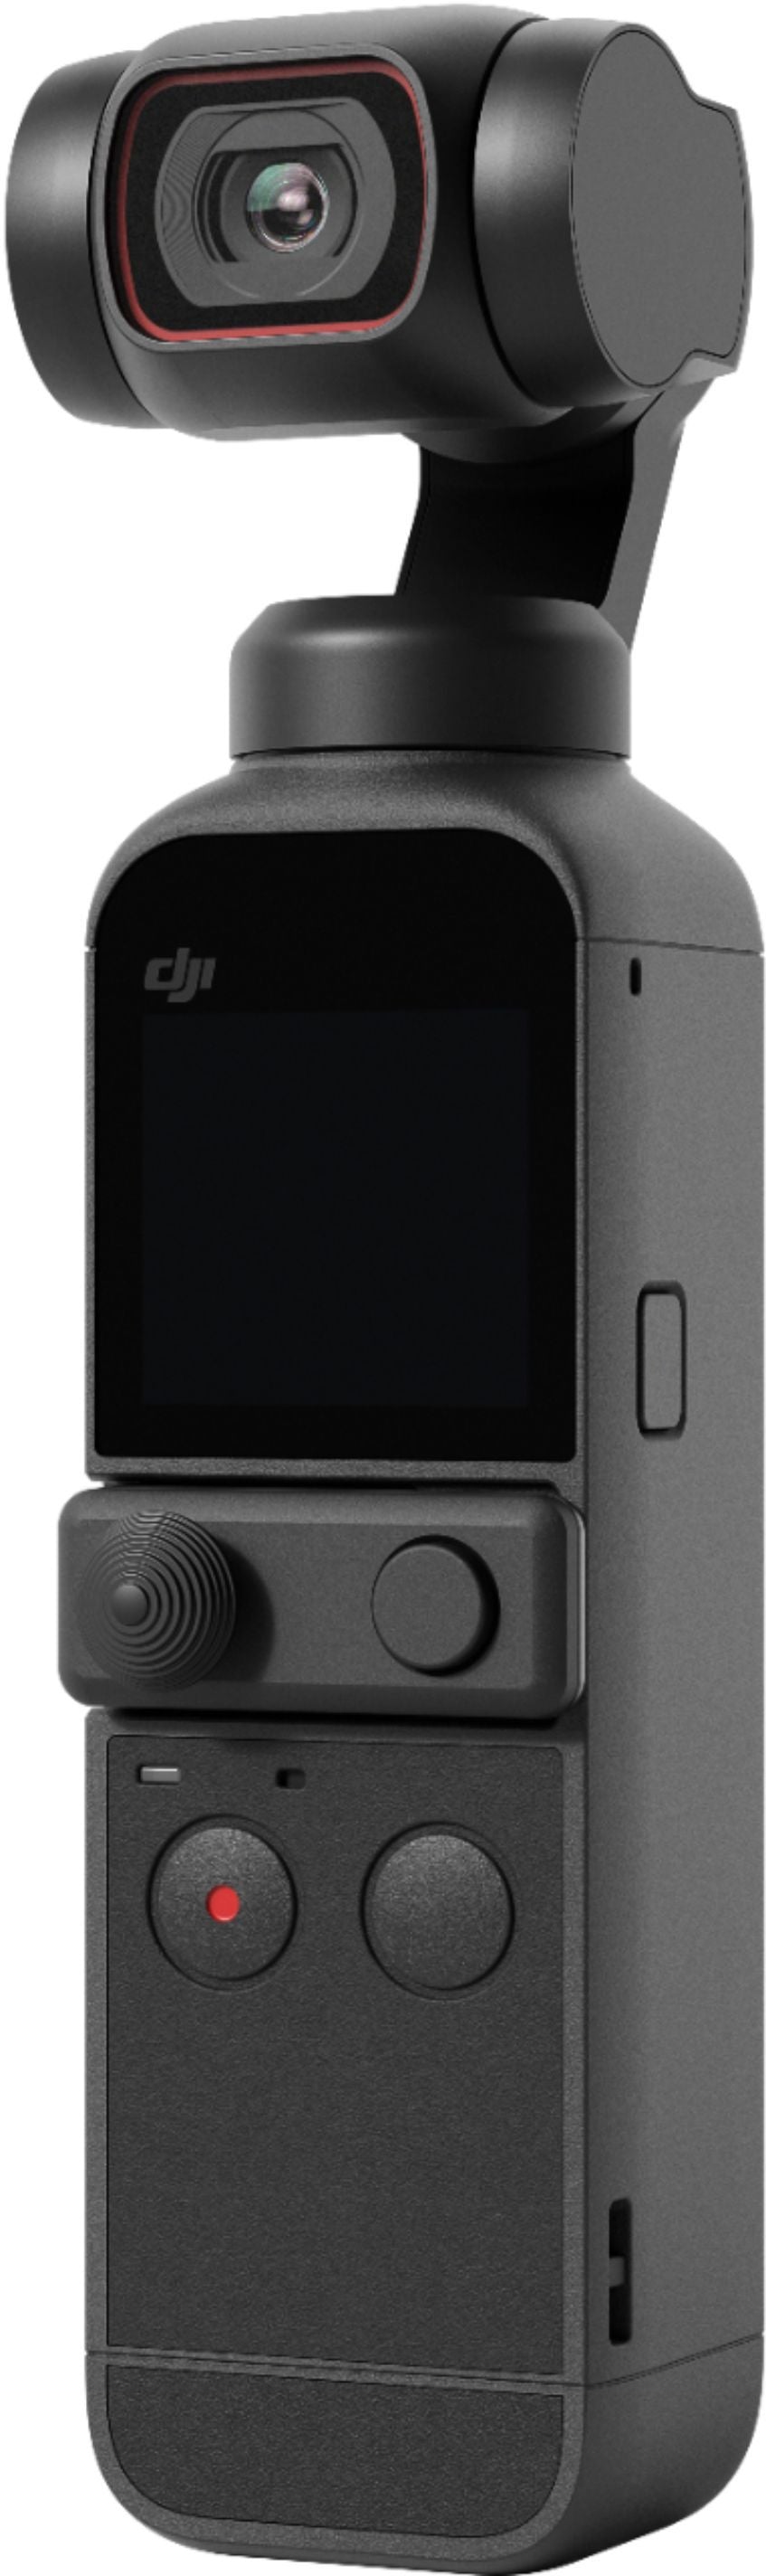 DJI Pocket 2 Creator Combo (Refurbished)